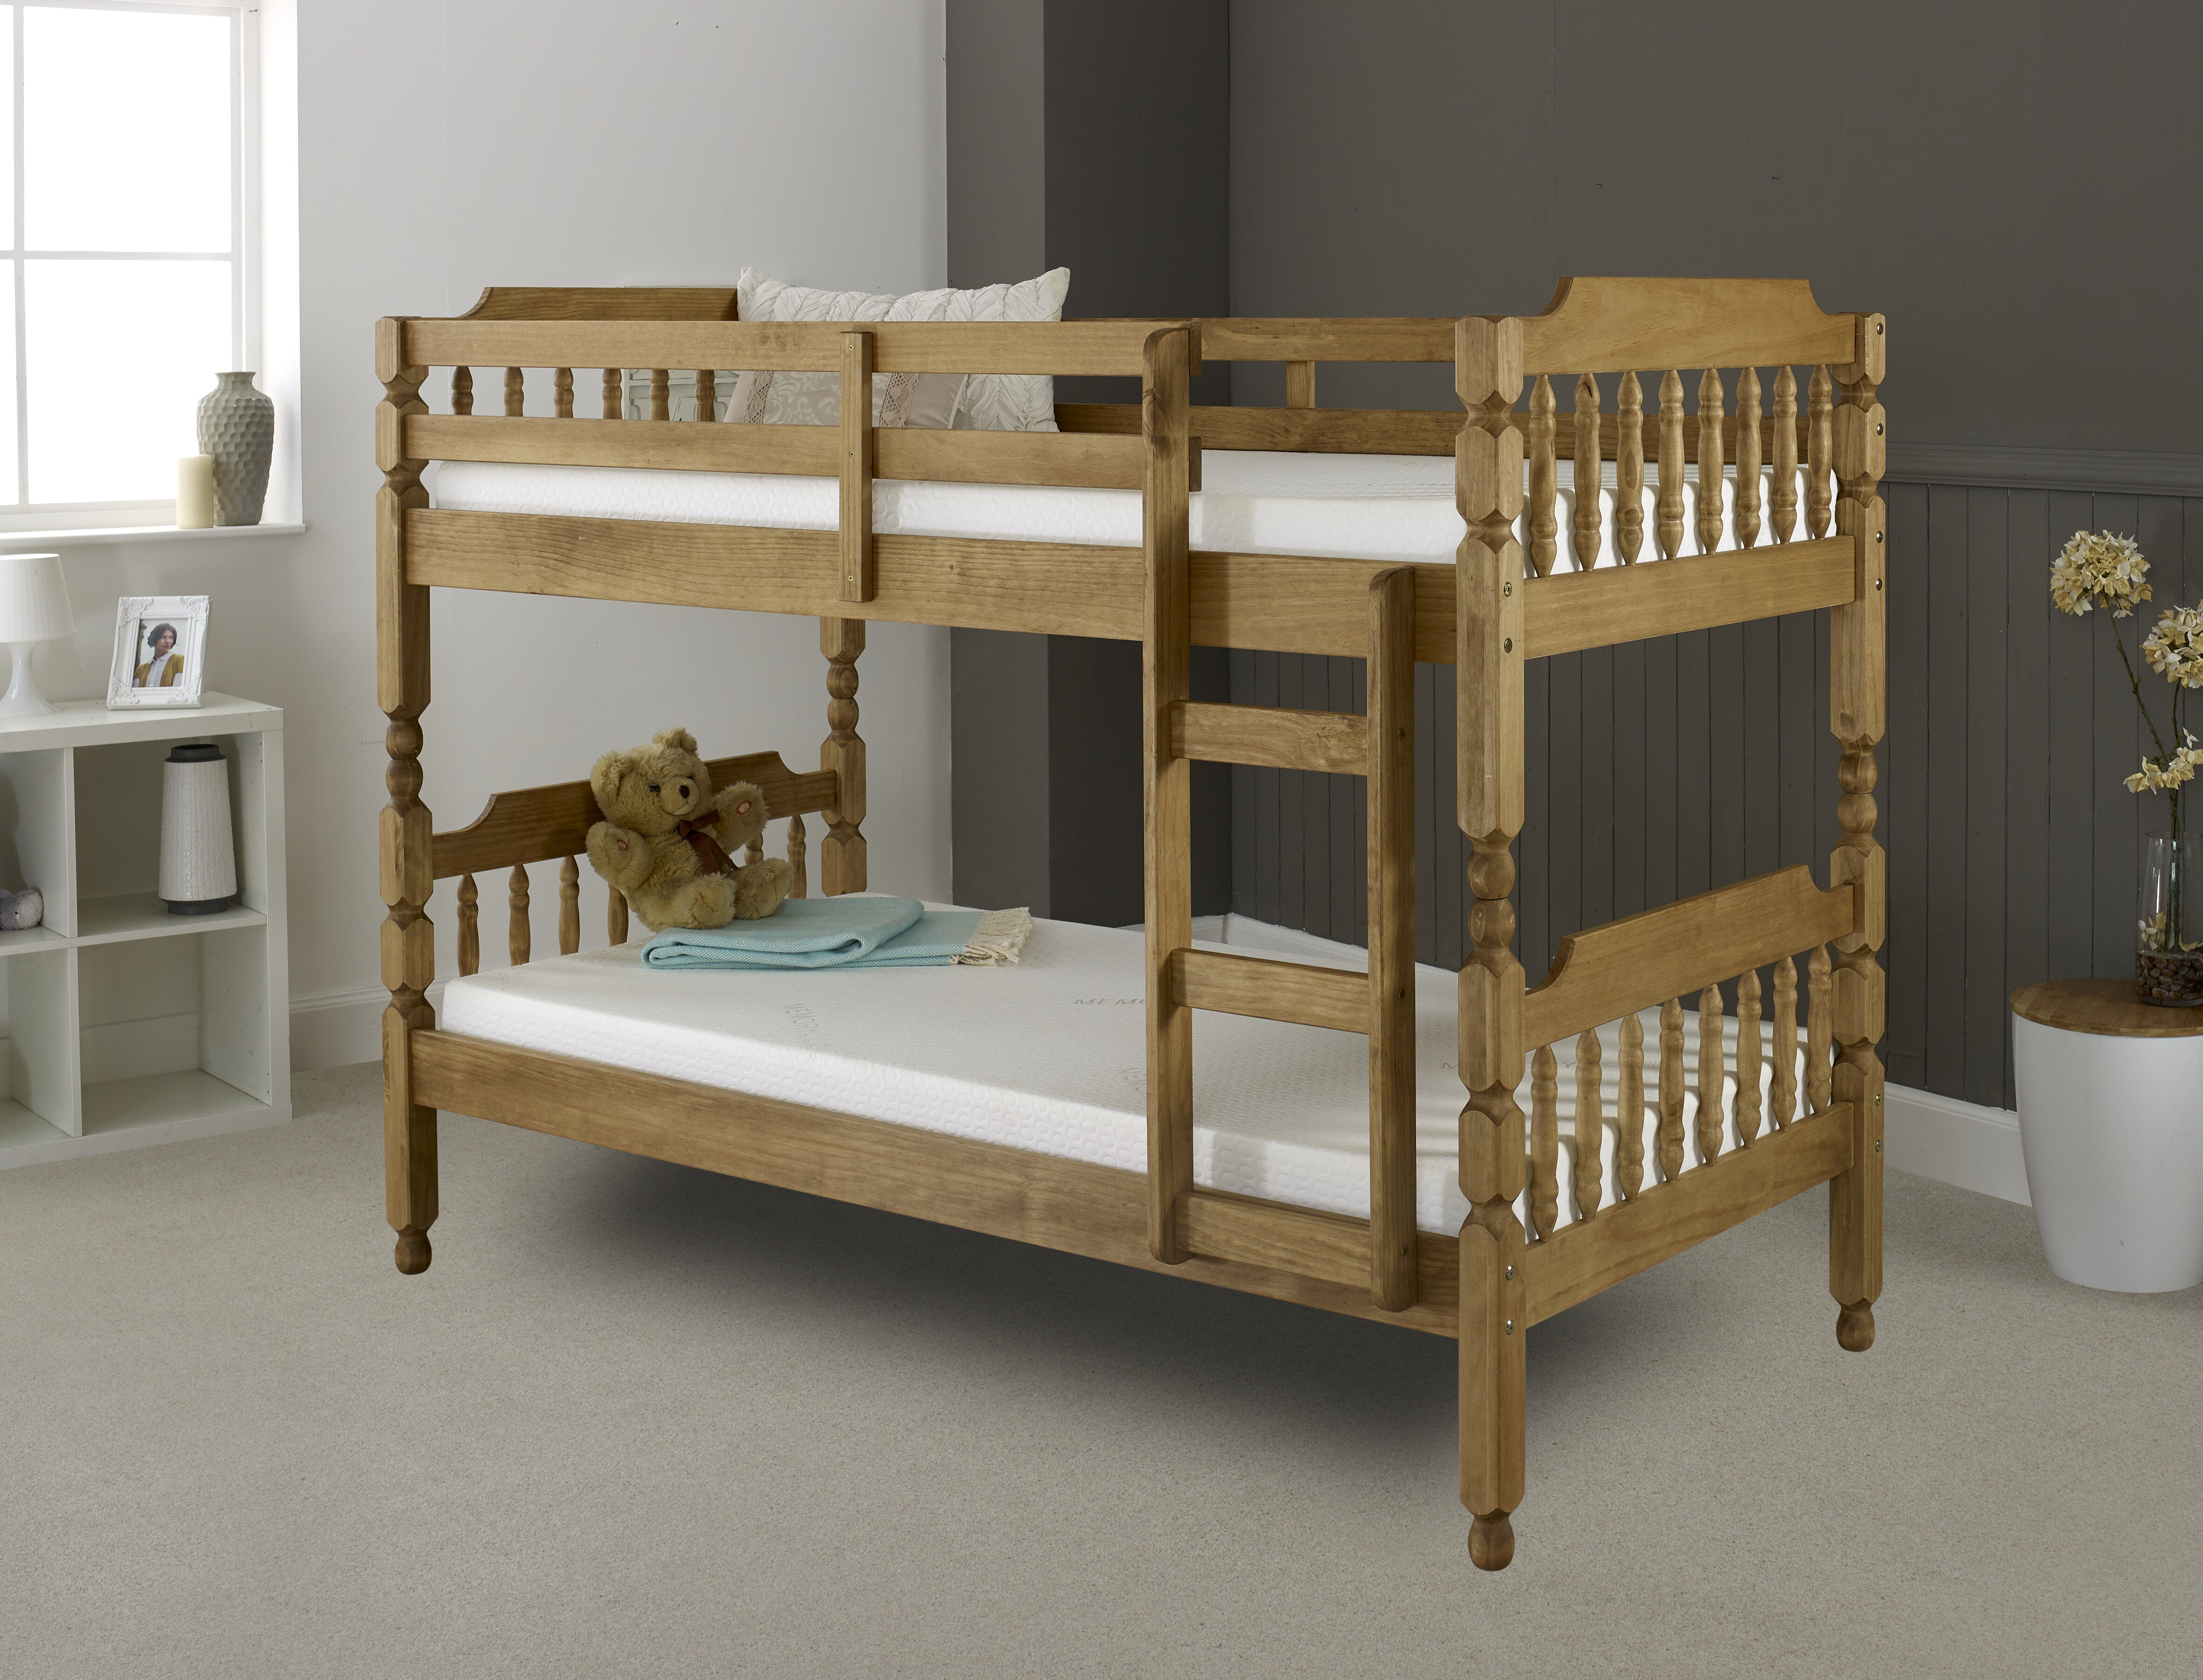 Just Kids Solid Wood Bunk Bed By Just Kids & Reviews | Wayfair.Co.Uk